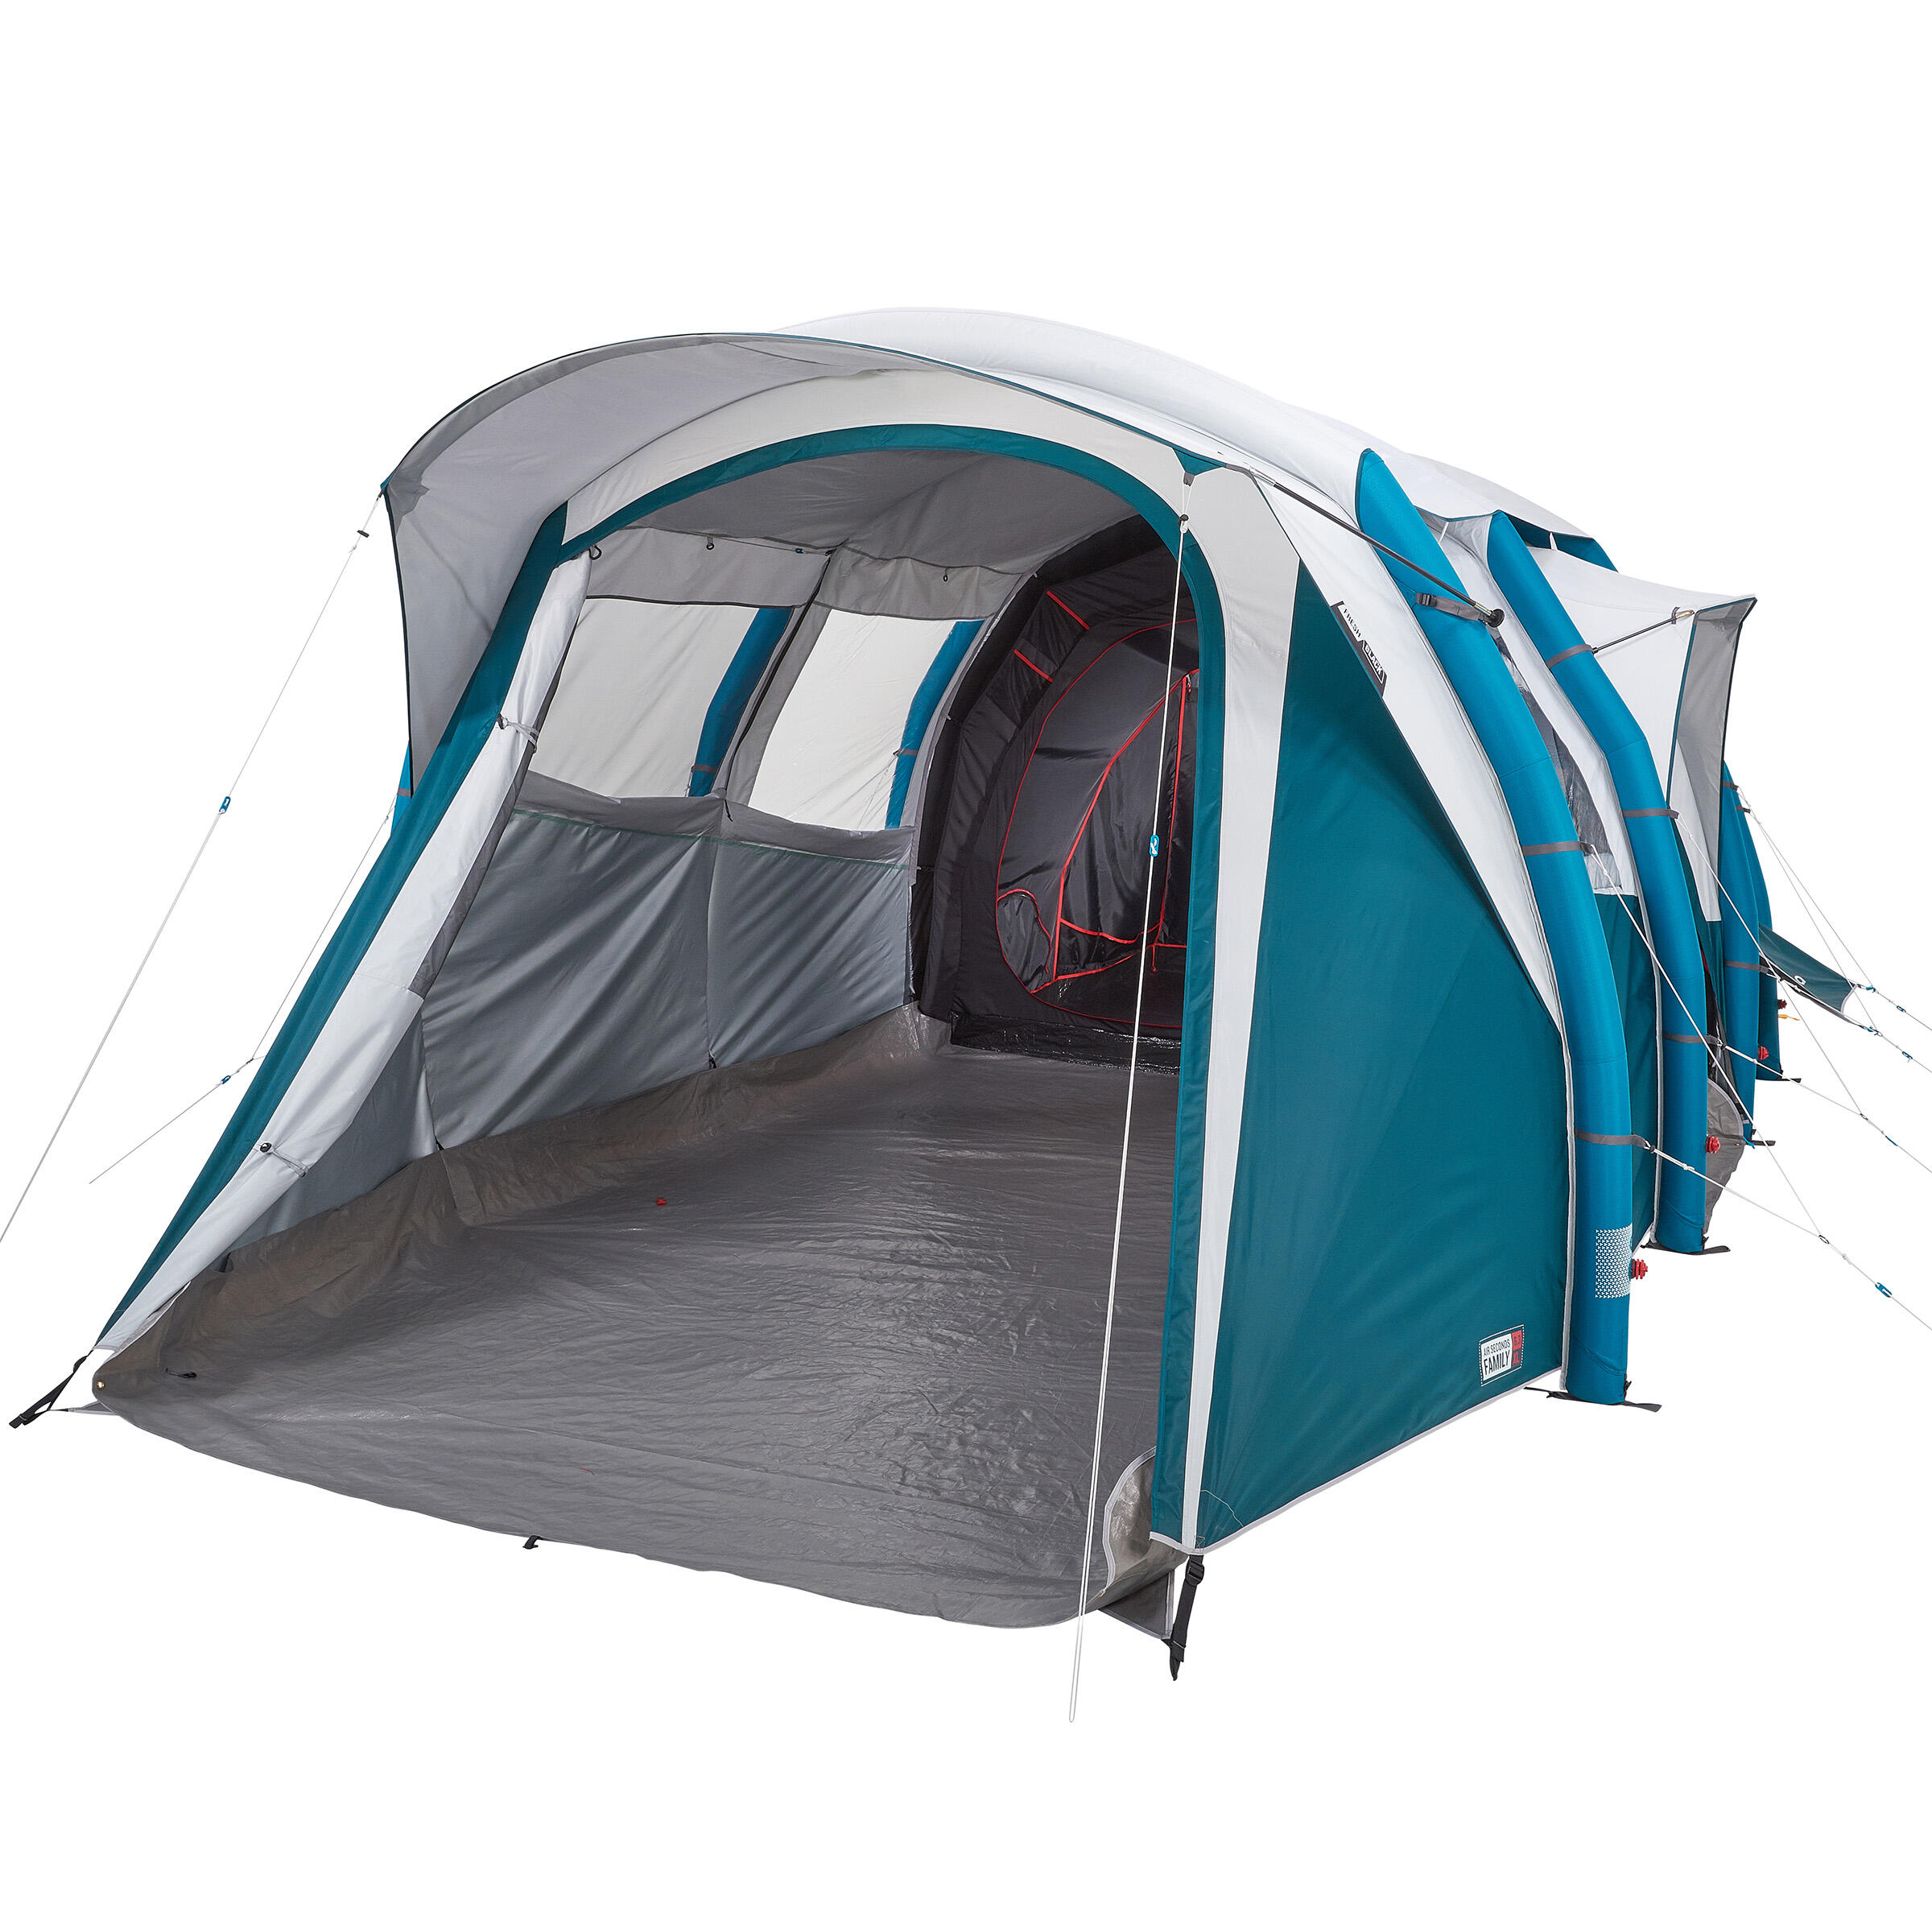 decathlon tents uk